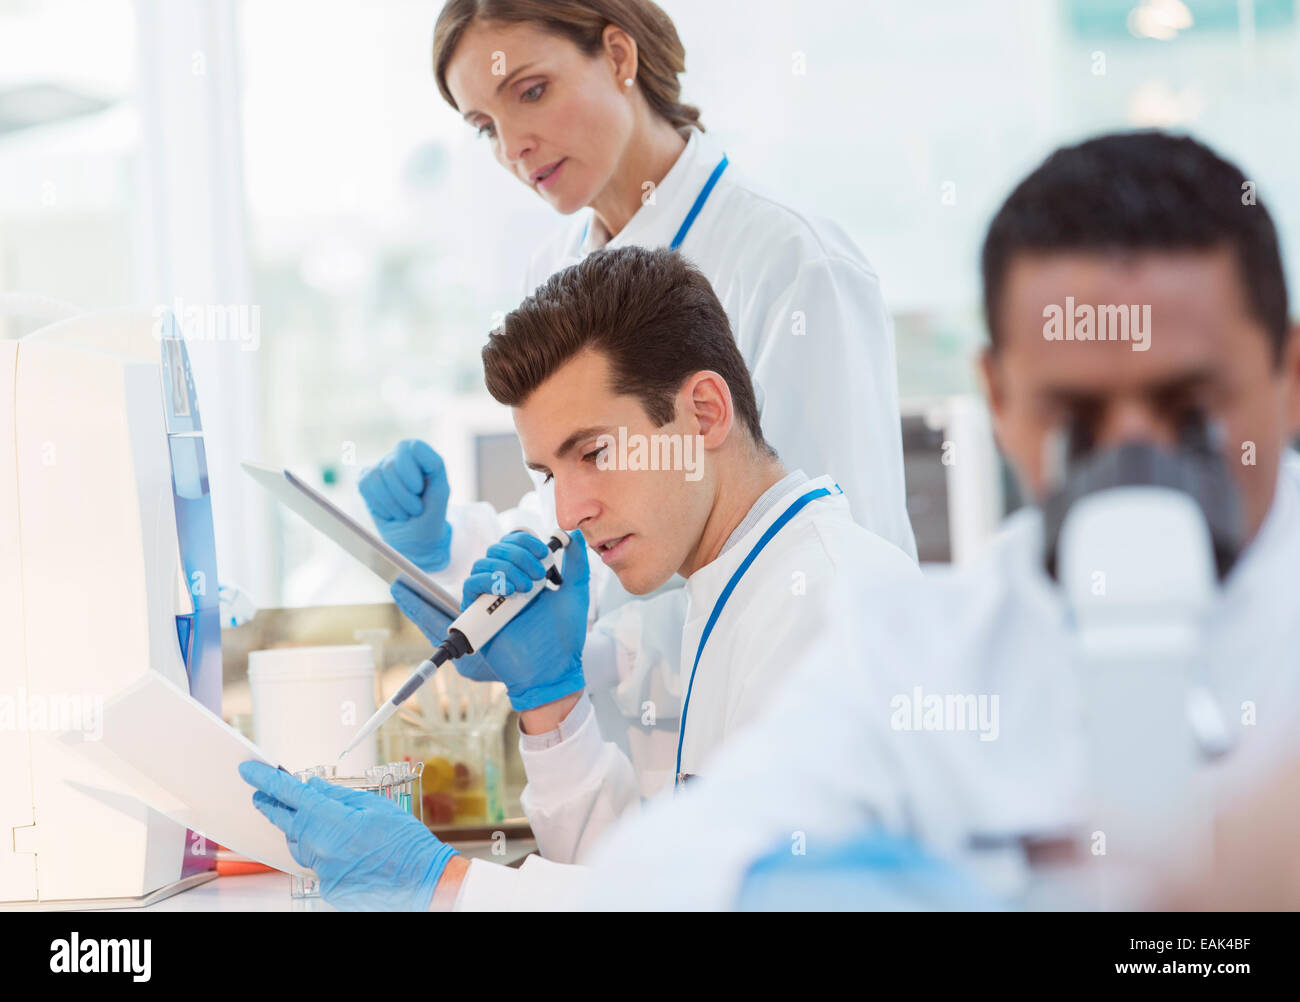 Scientist pipetting sample in laboratory Stock Photo